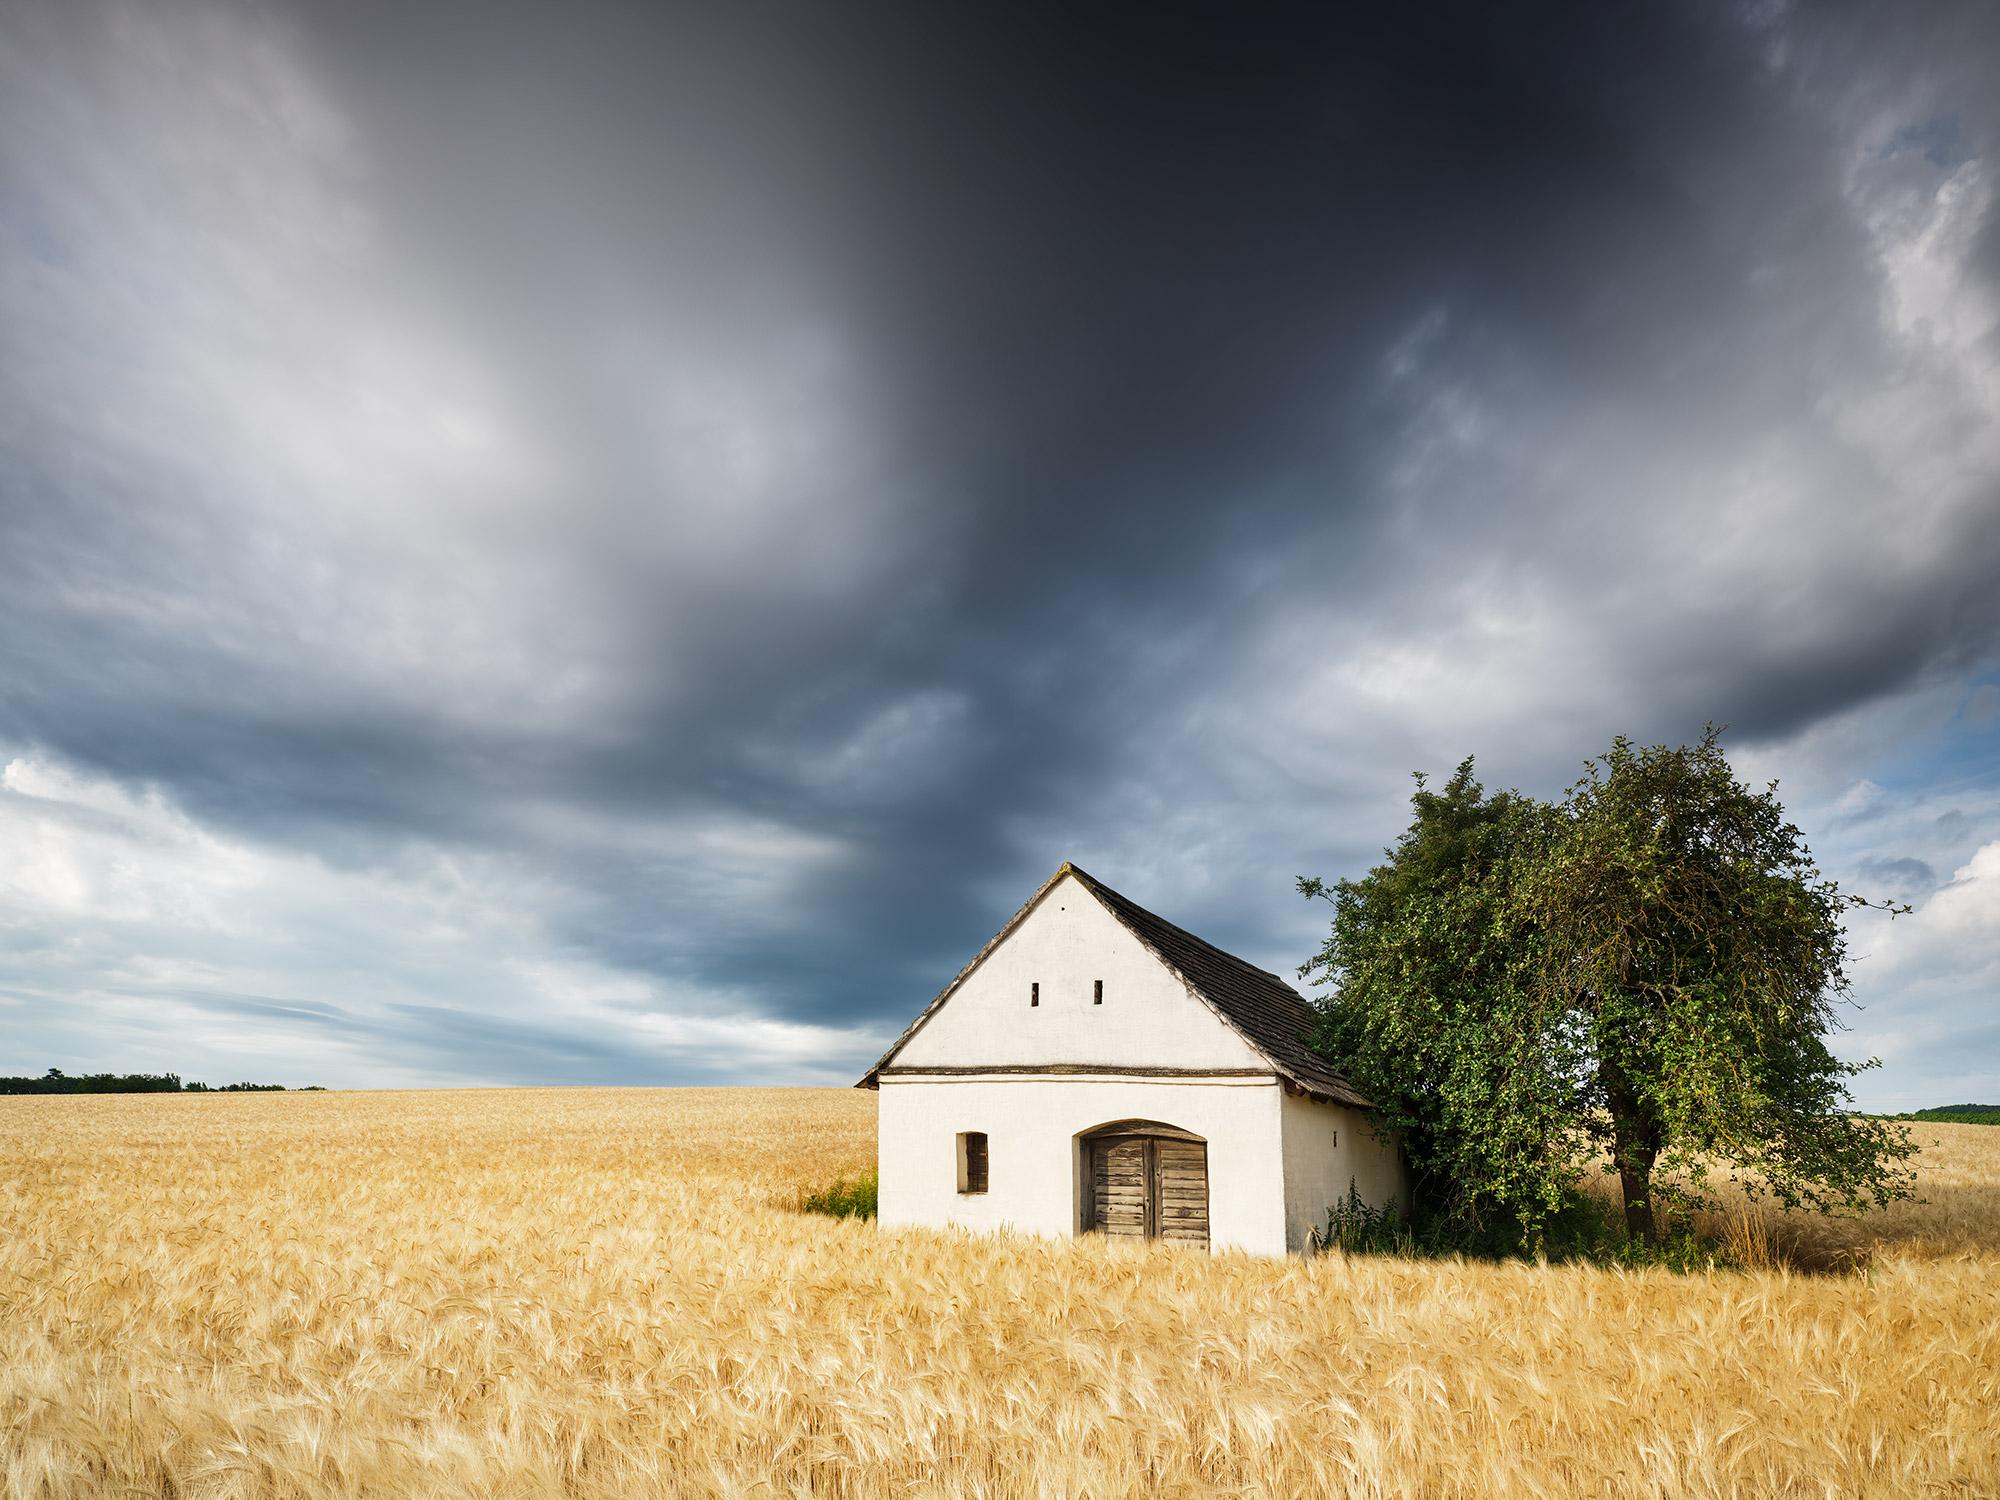 Wine Press House in the wheat field, Austria, Colour art photography, landscape